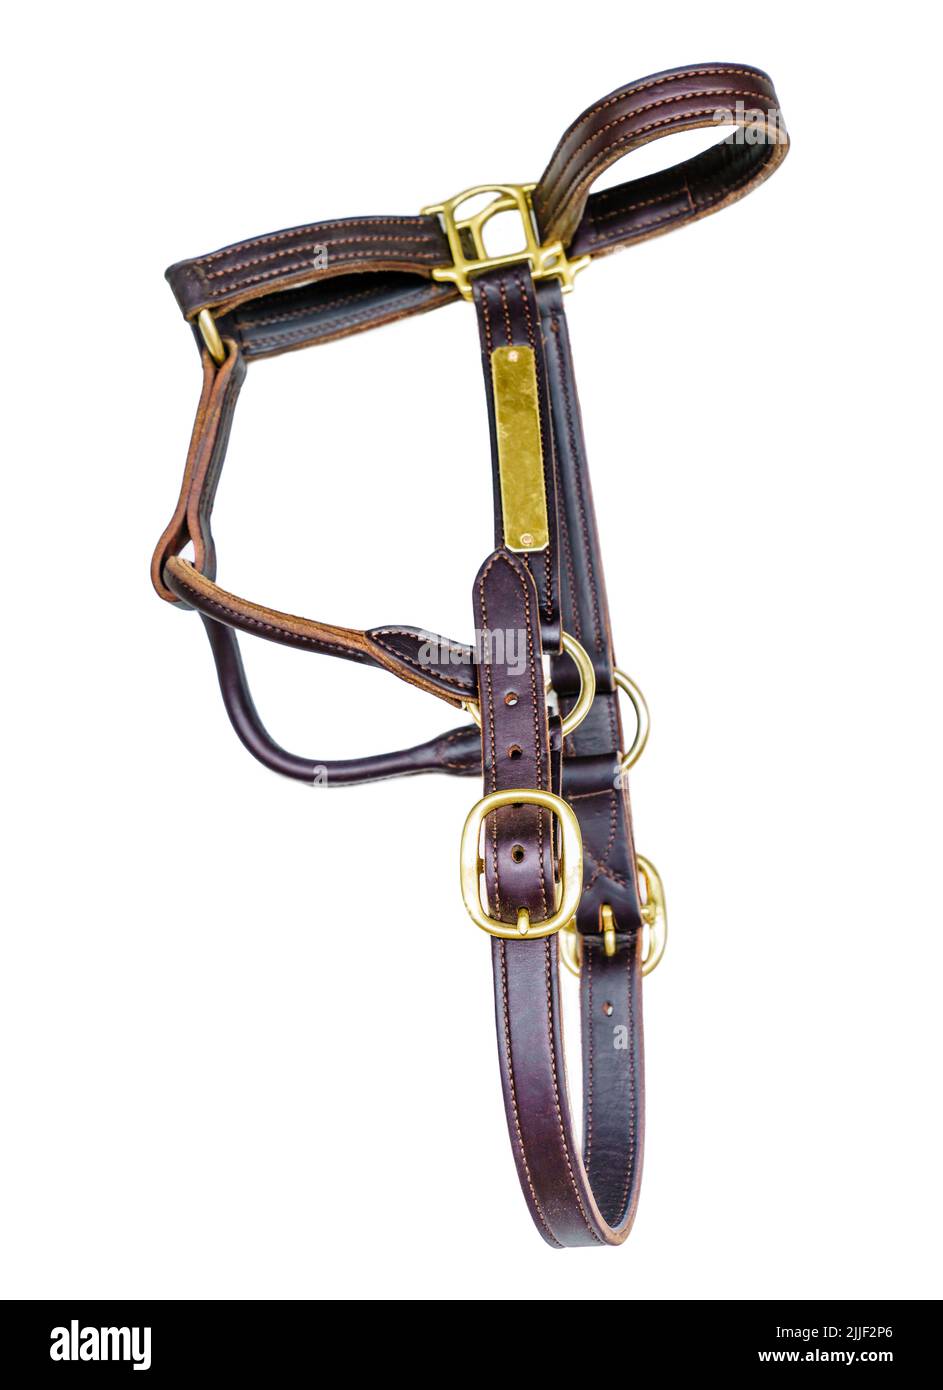 Imagen de primer plano de un burlete de cuero o halter de caballo aislado sobre fondo blanco Foto de stock